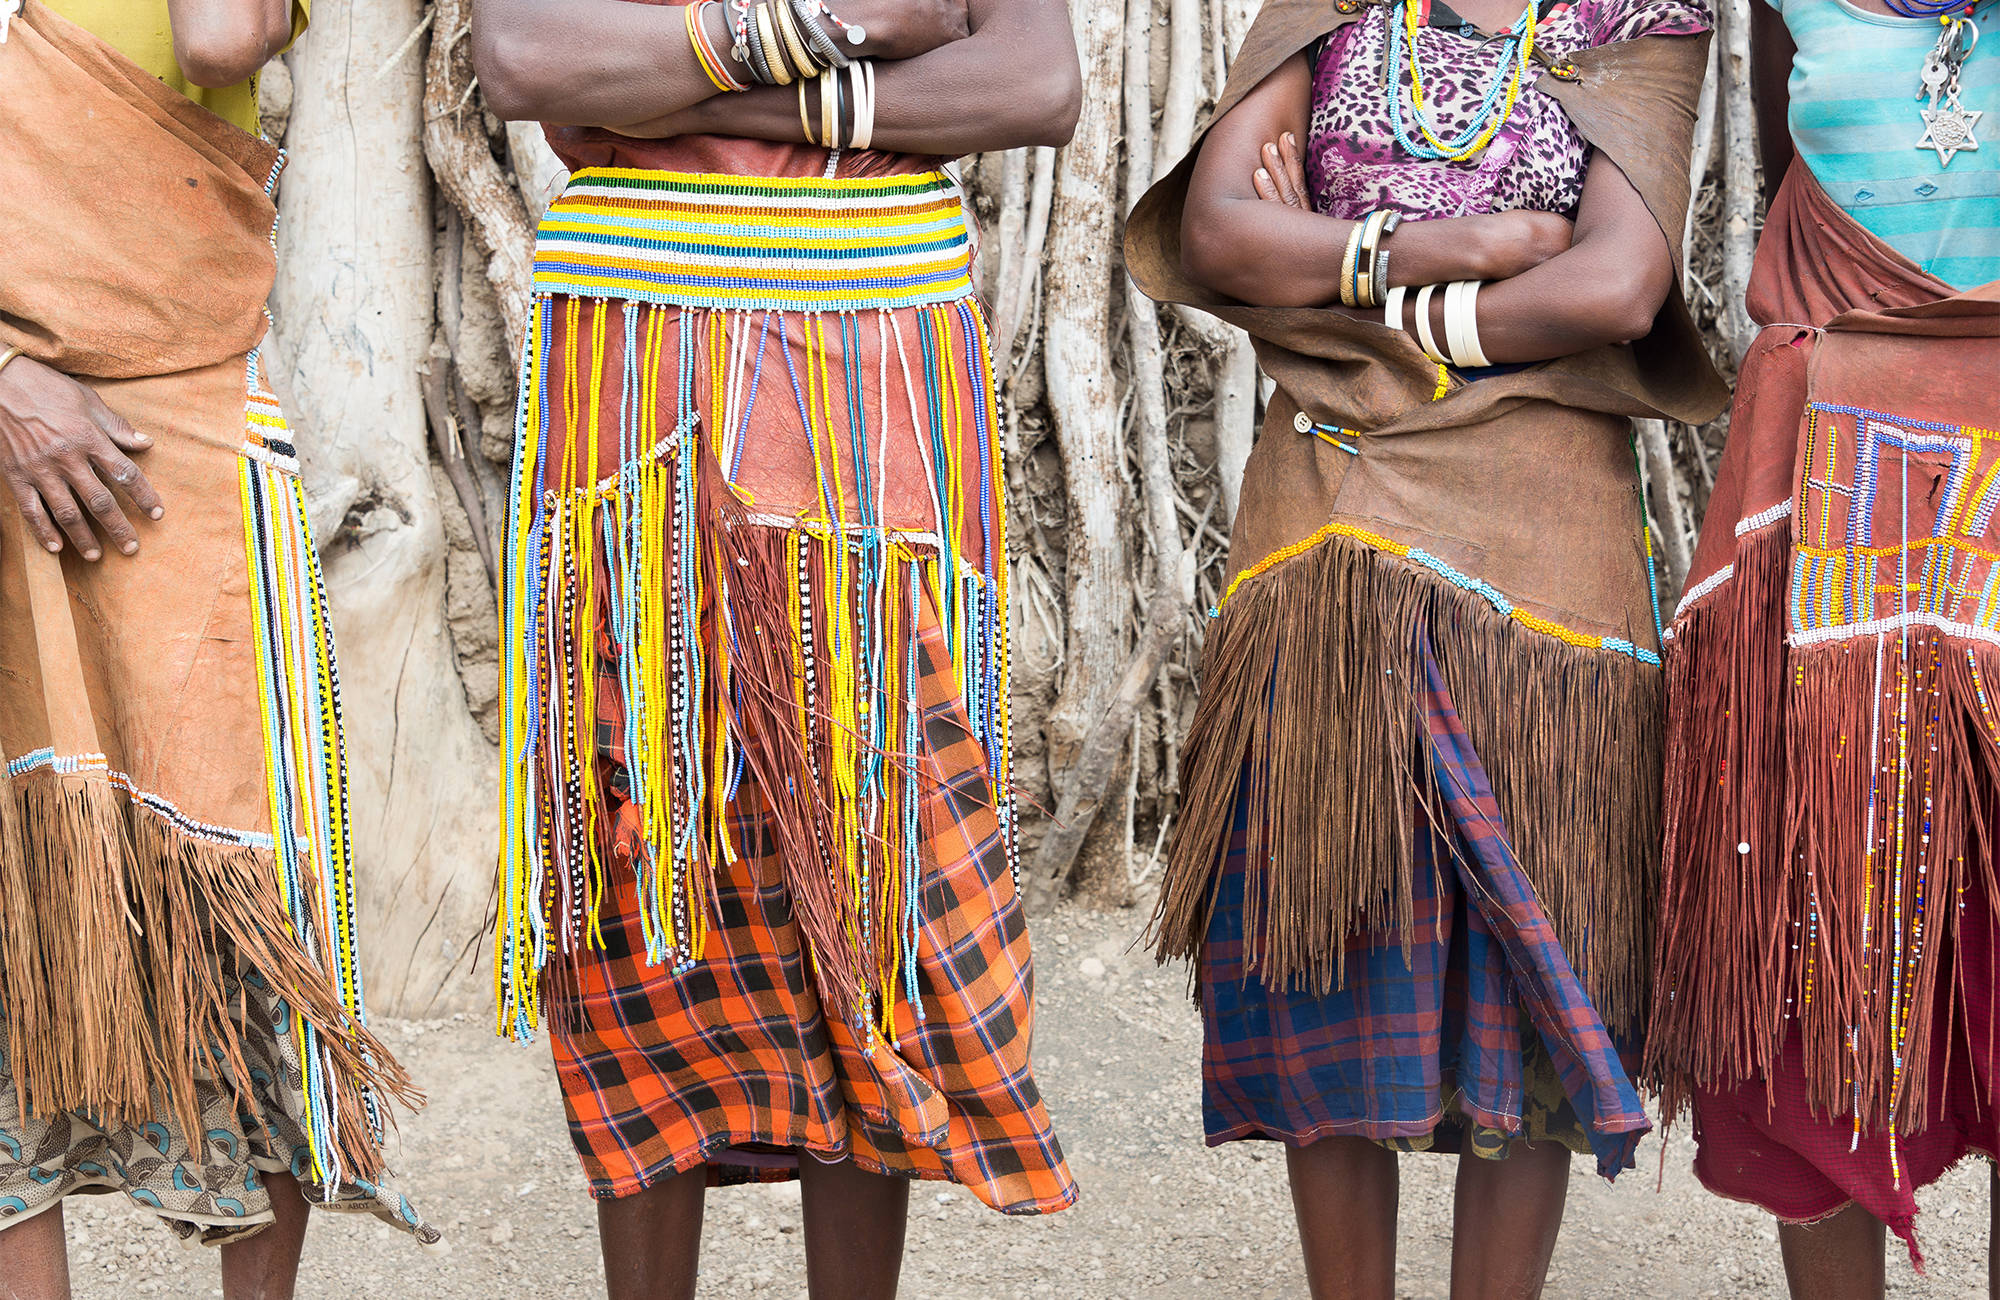 Locals in Afrikaanse klederdracht in Kenia | Beste reistijd augustus | Beste bestemmingen augustus | Reiskalender | KILROY